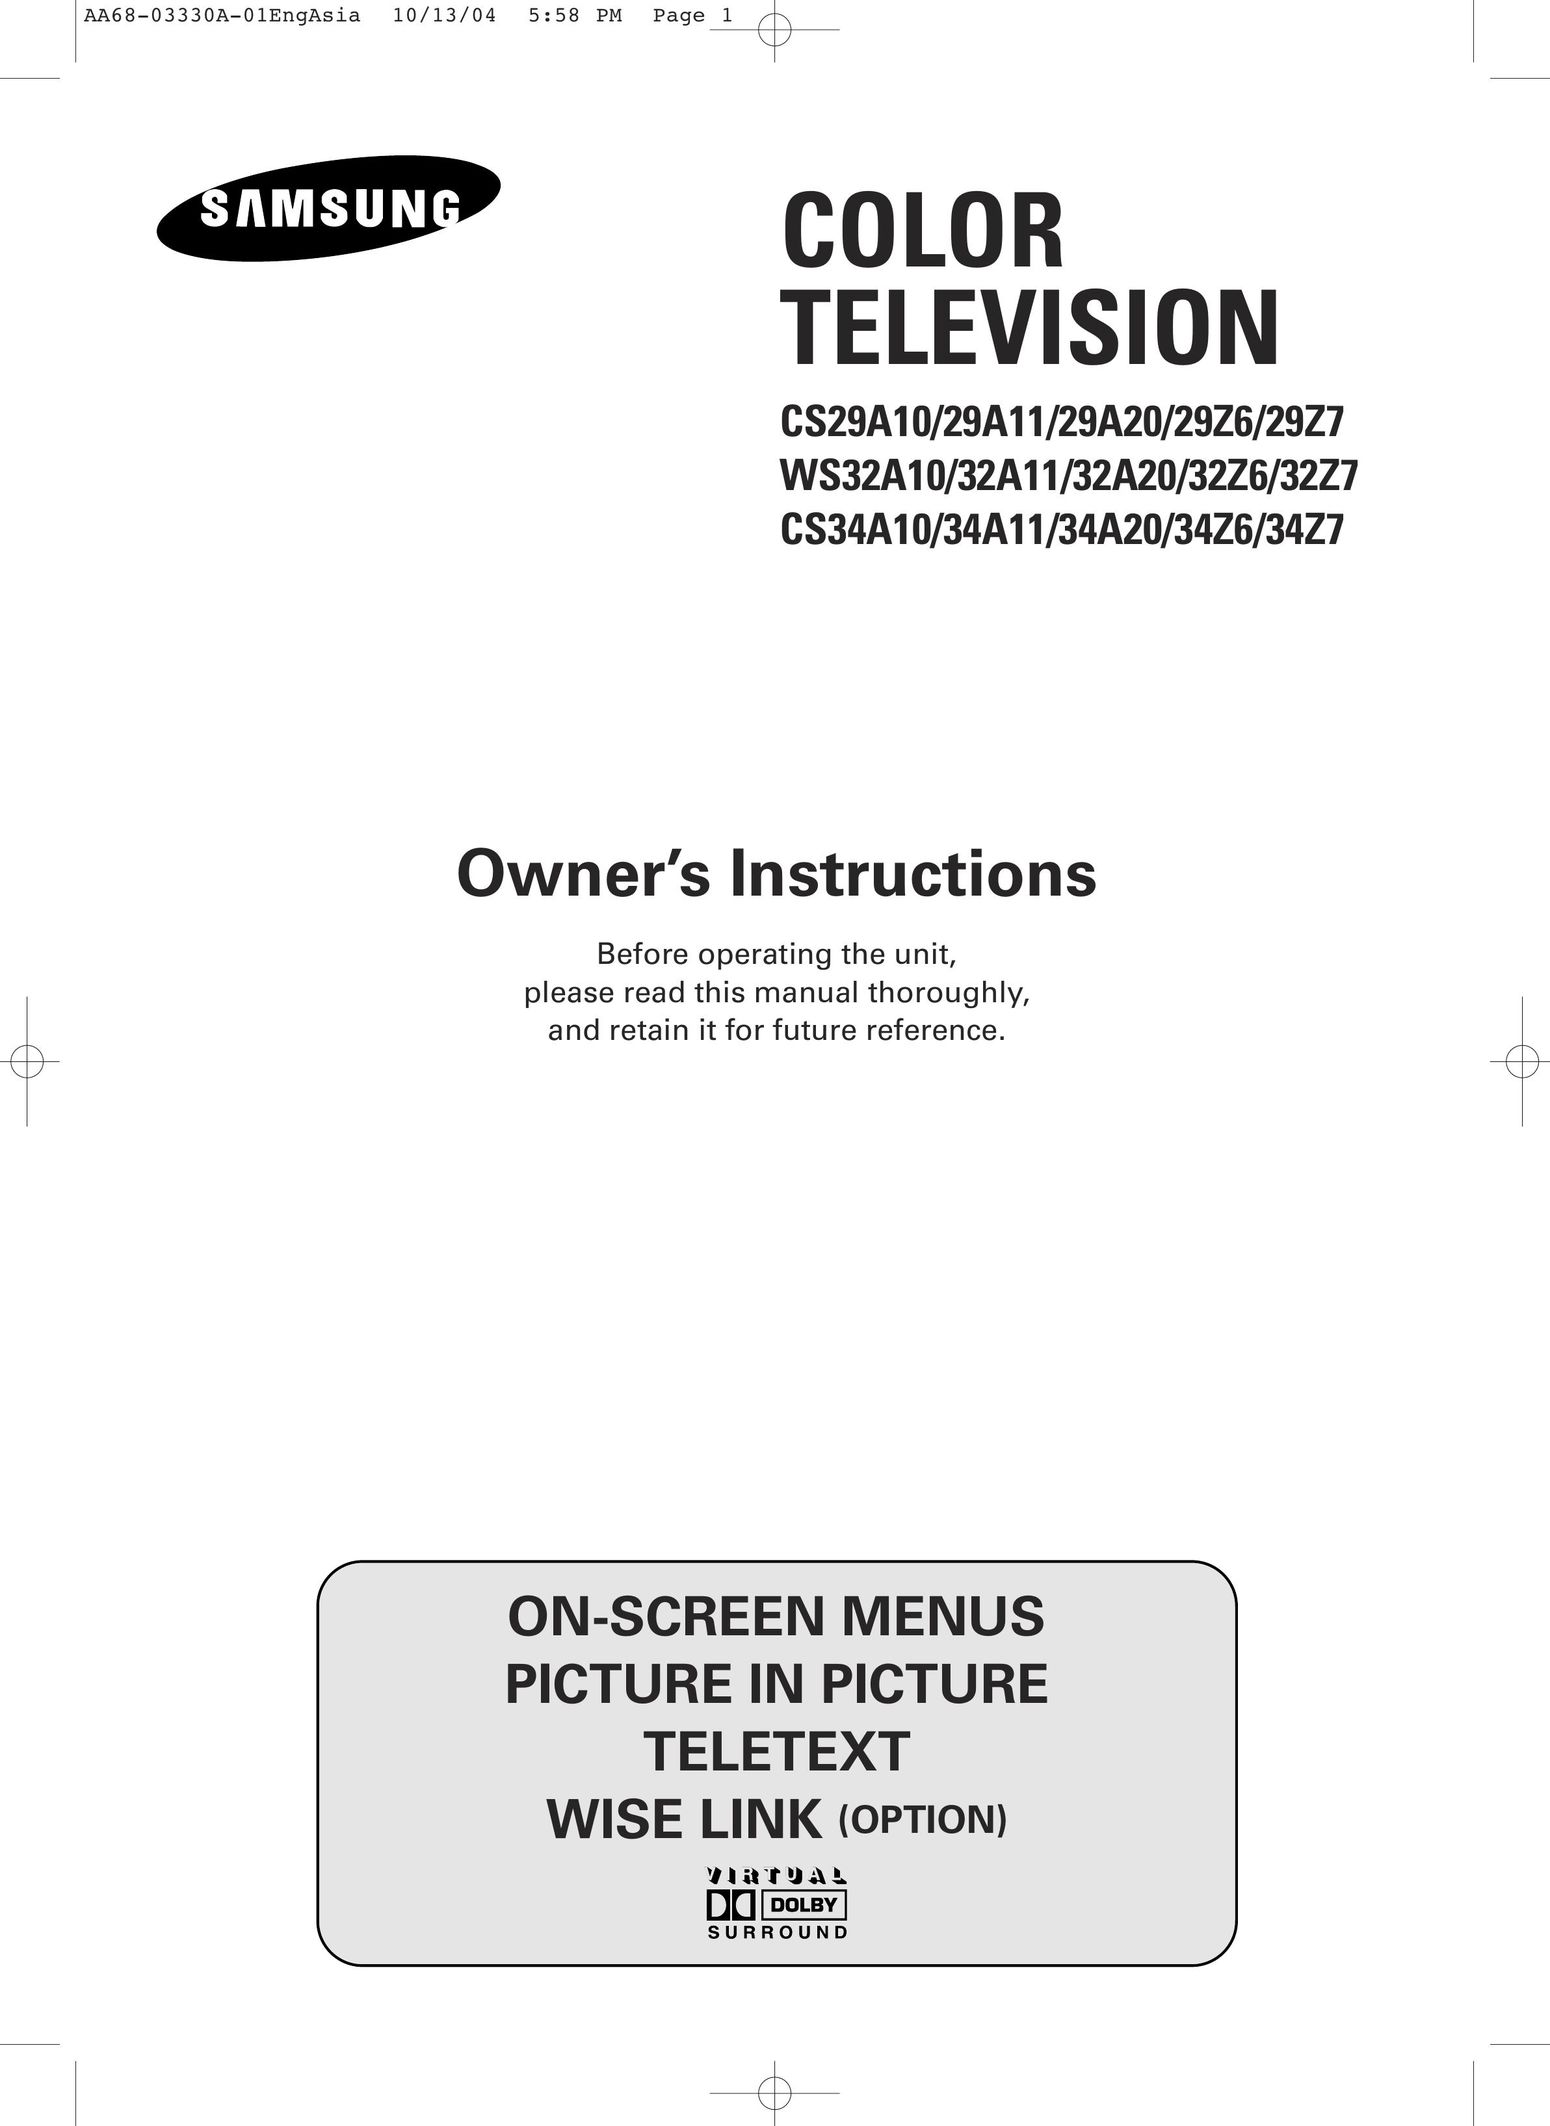 Samsung 34A11 CRT Television User Manual